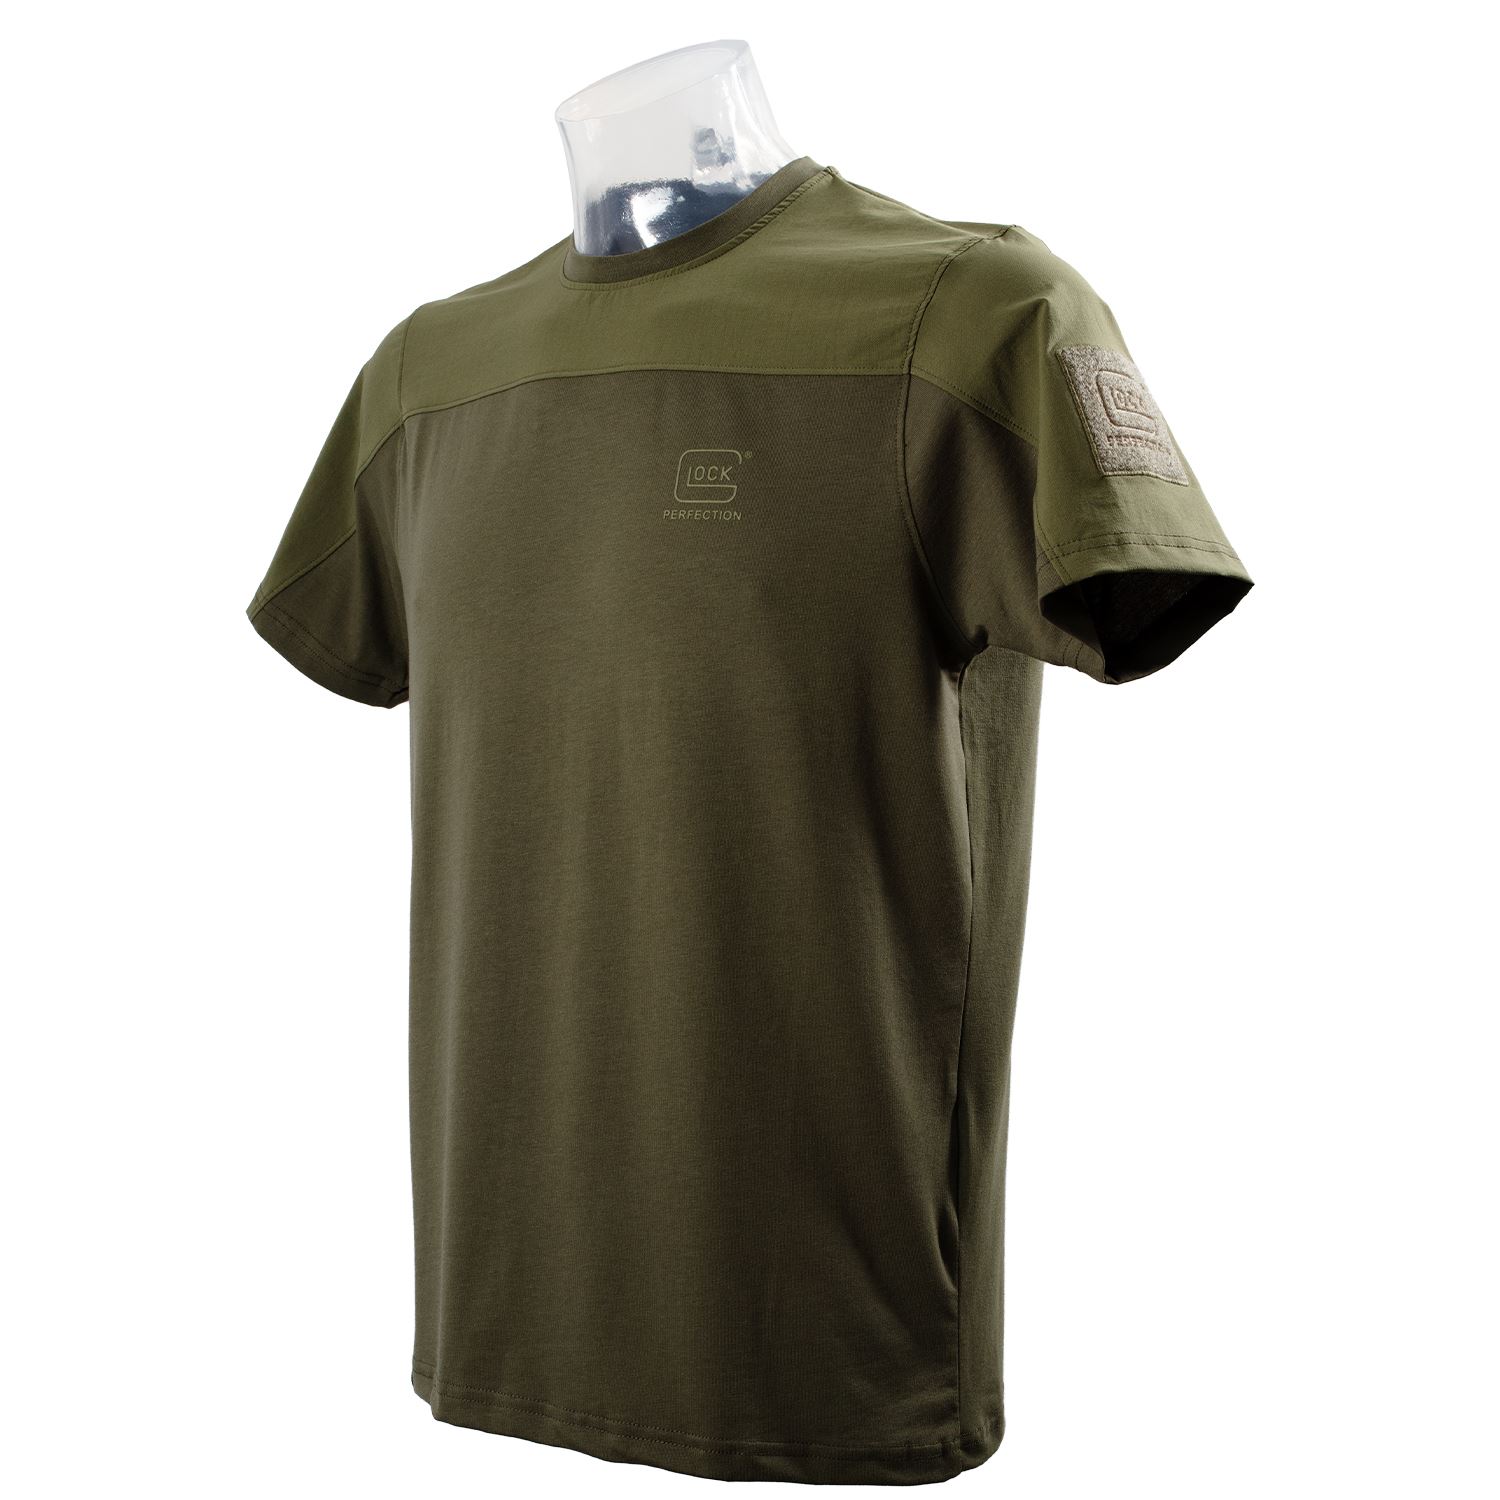 GLOCK Tactical T-Shirt Olive